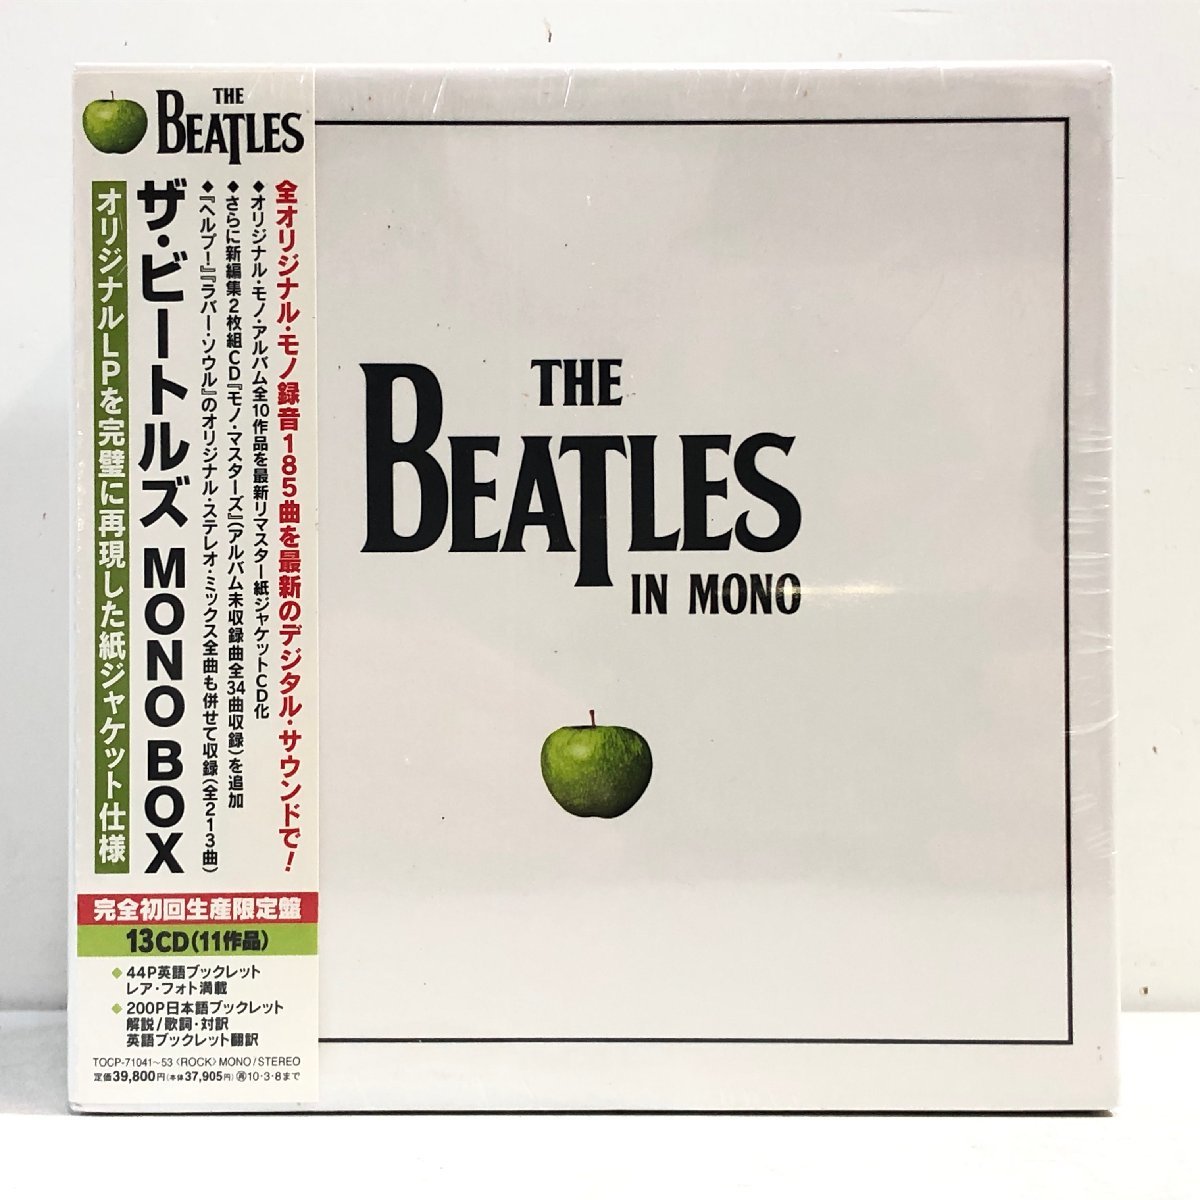 【13CD-BOX】ザ・ビートルズ MONO BOX / THE BEATLES IN MONO（EMI SHOP）未開封 TOCP71041-53